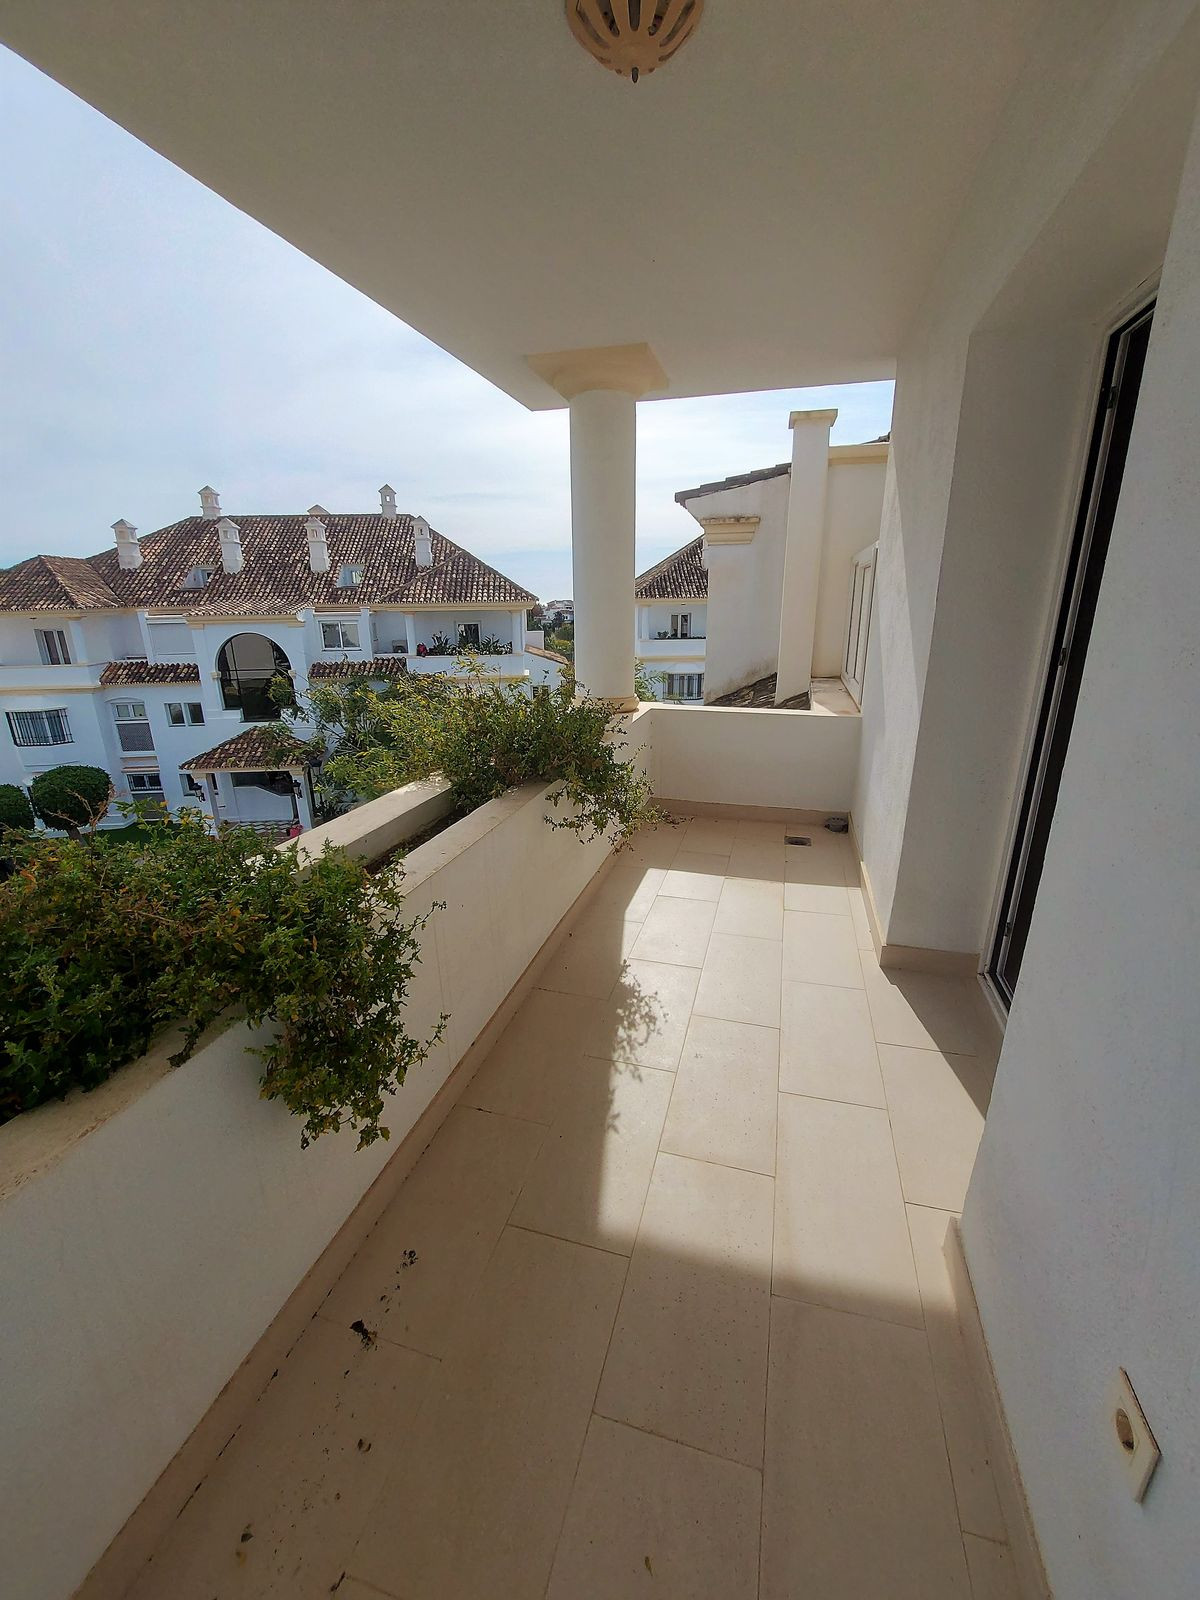 Apartment Penthouse Duplex in Marbella, Costa del Sol
